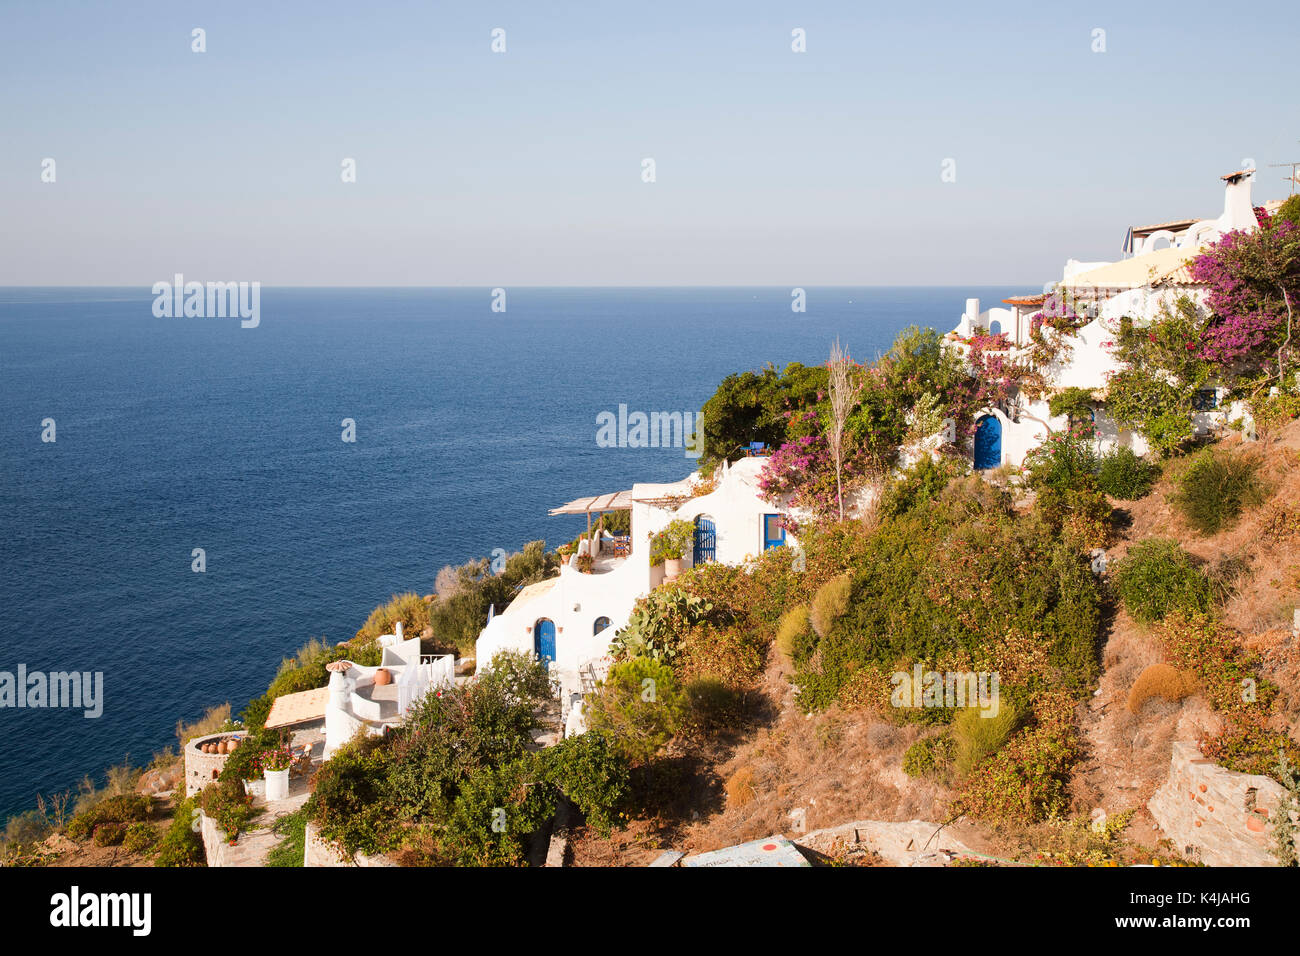 traditional house, road from Armenistis to Nas, Ikaria island, Aegean Sea, Greece, Europe Stock Photo